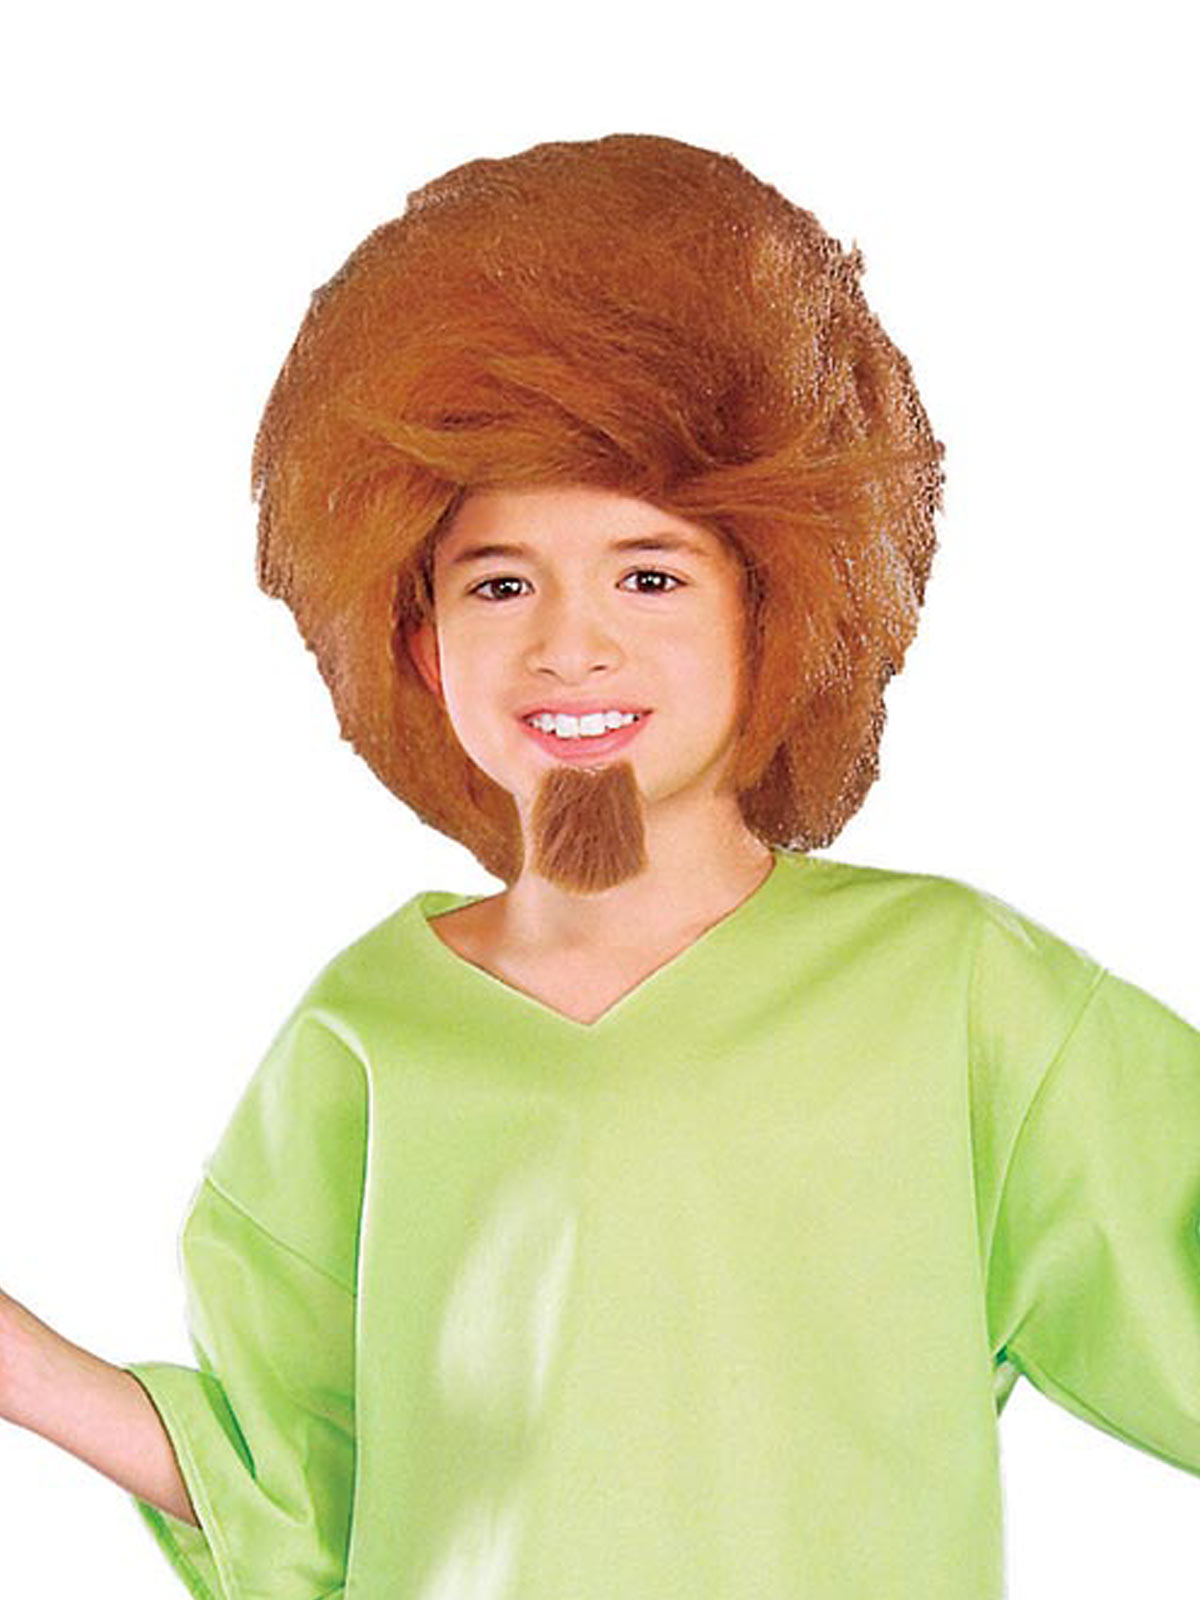 Shaggy Scooby Doo Costume - Child - Sunbury Costumes